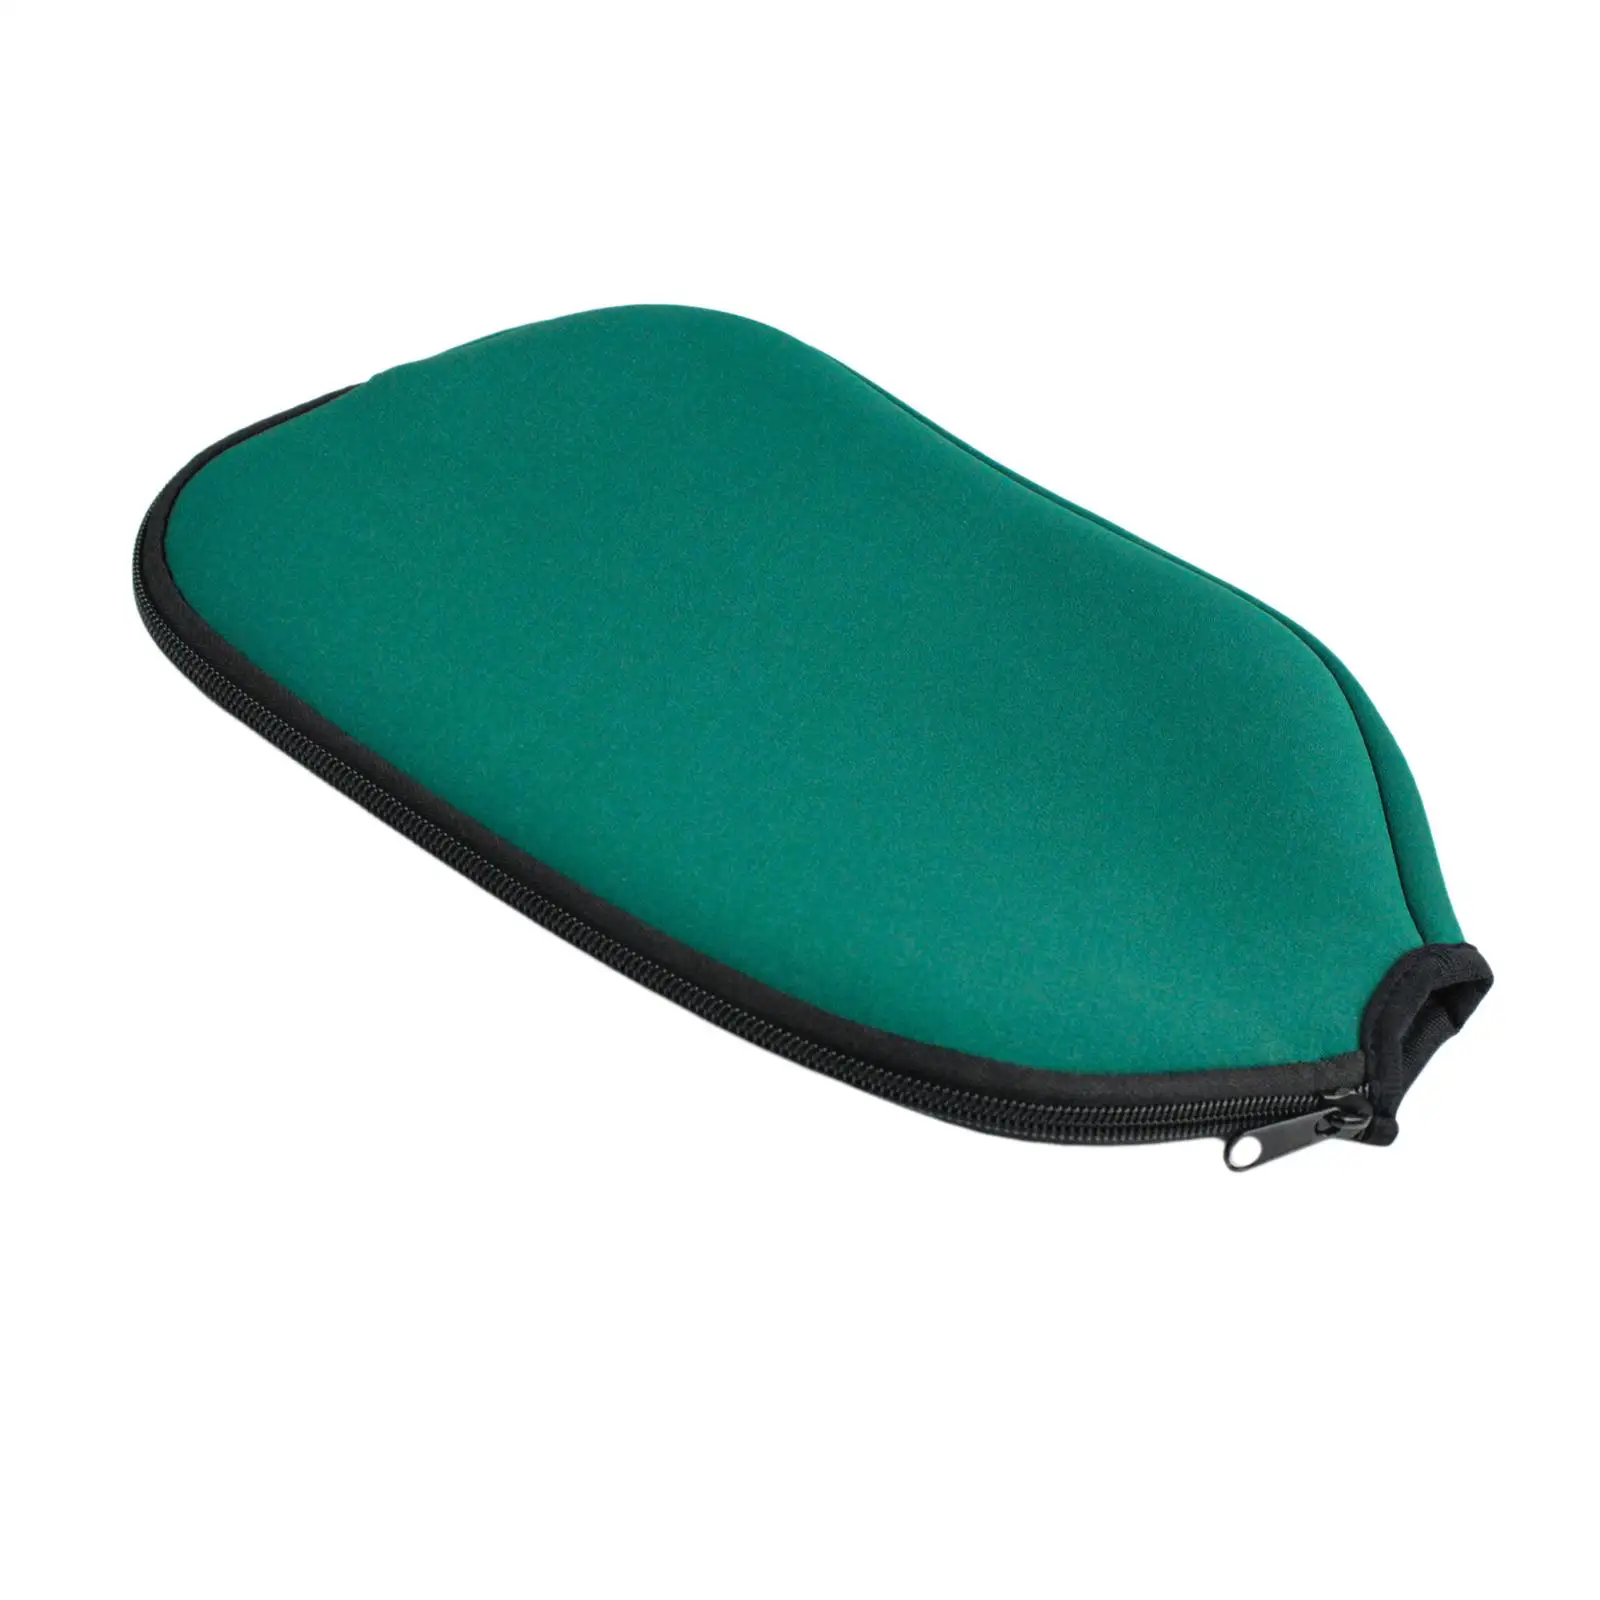 Racket Sleeve Storage Protective Sleeve Storage Carrier Accessories Gift Waterproof Neoprene Paddle Cover Pickleball Head Cover